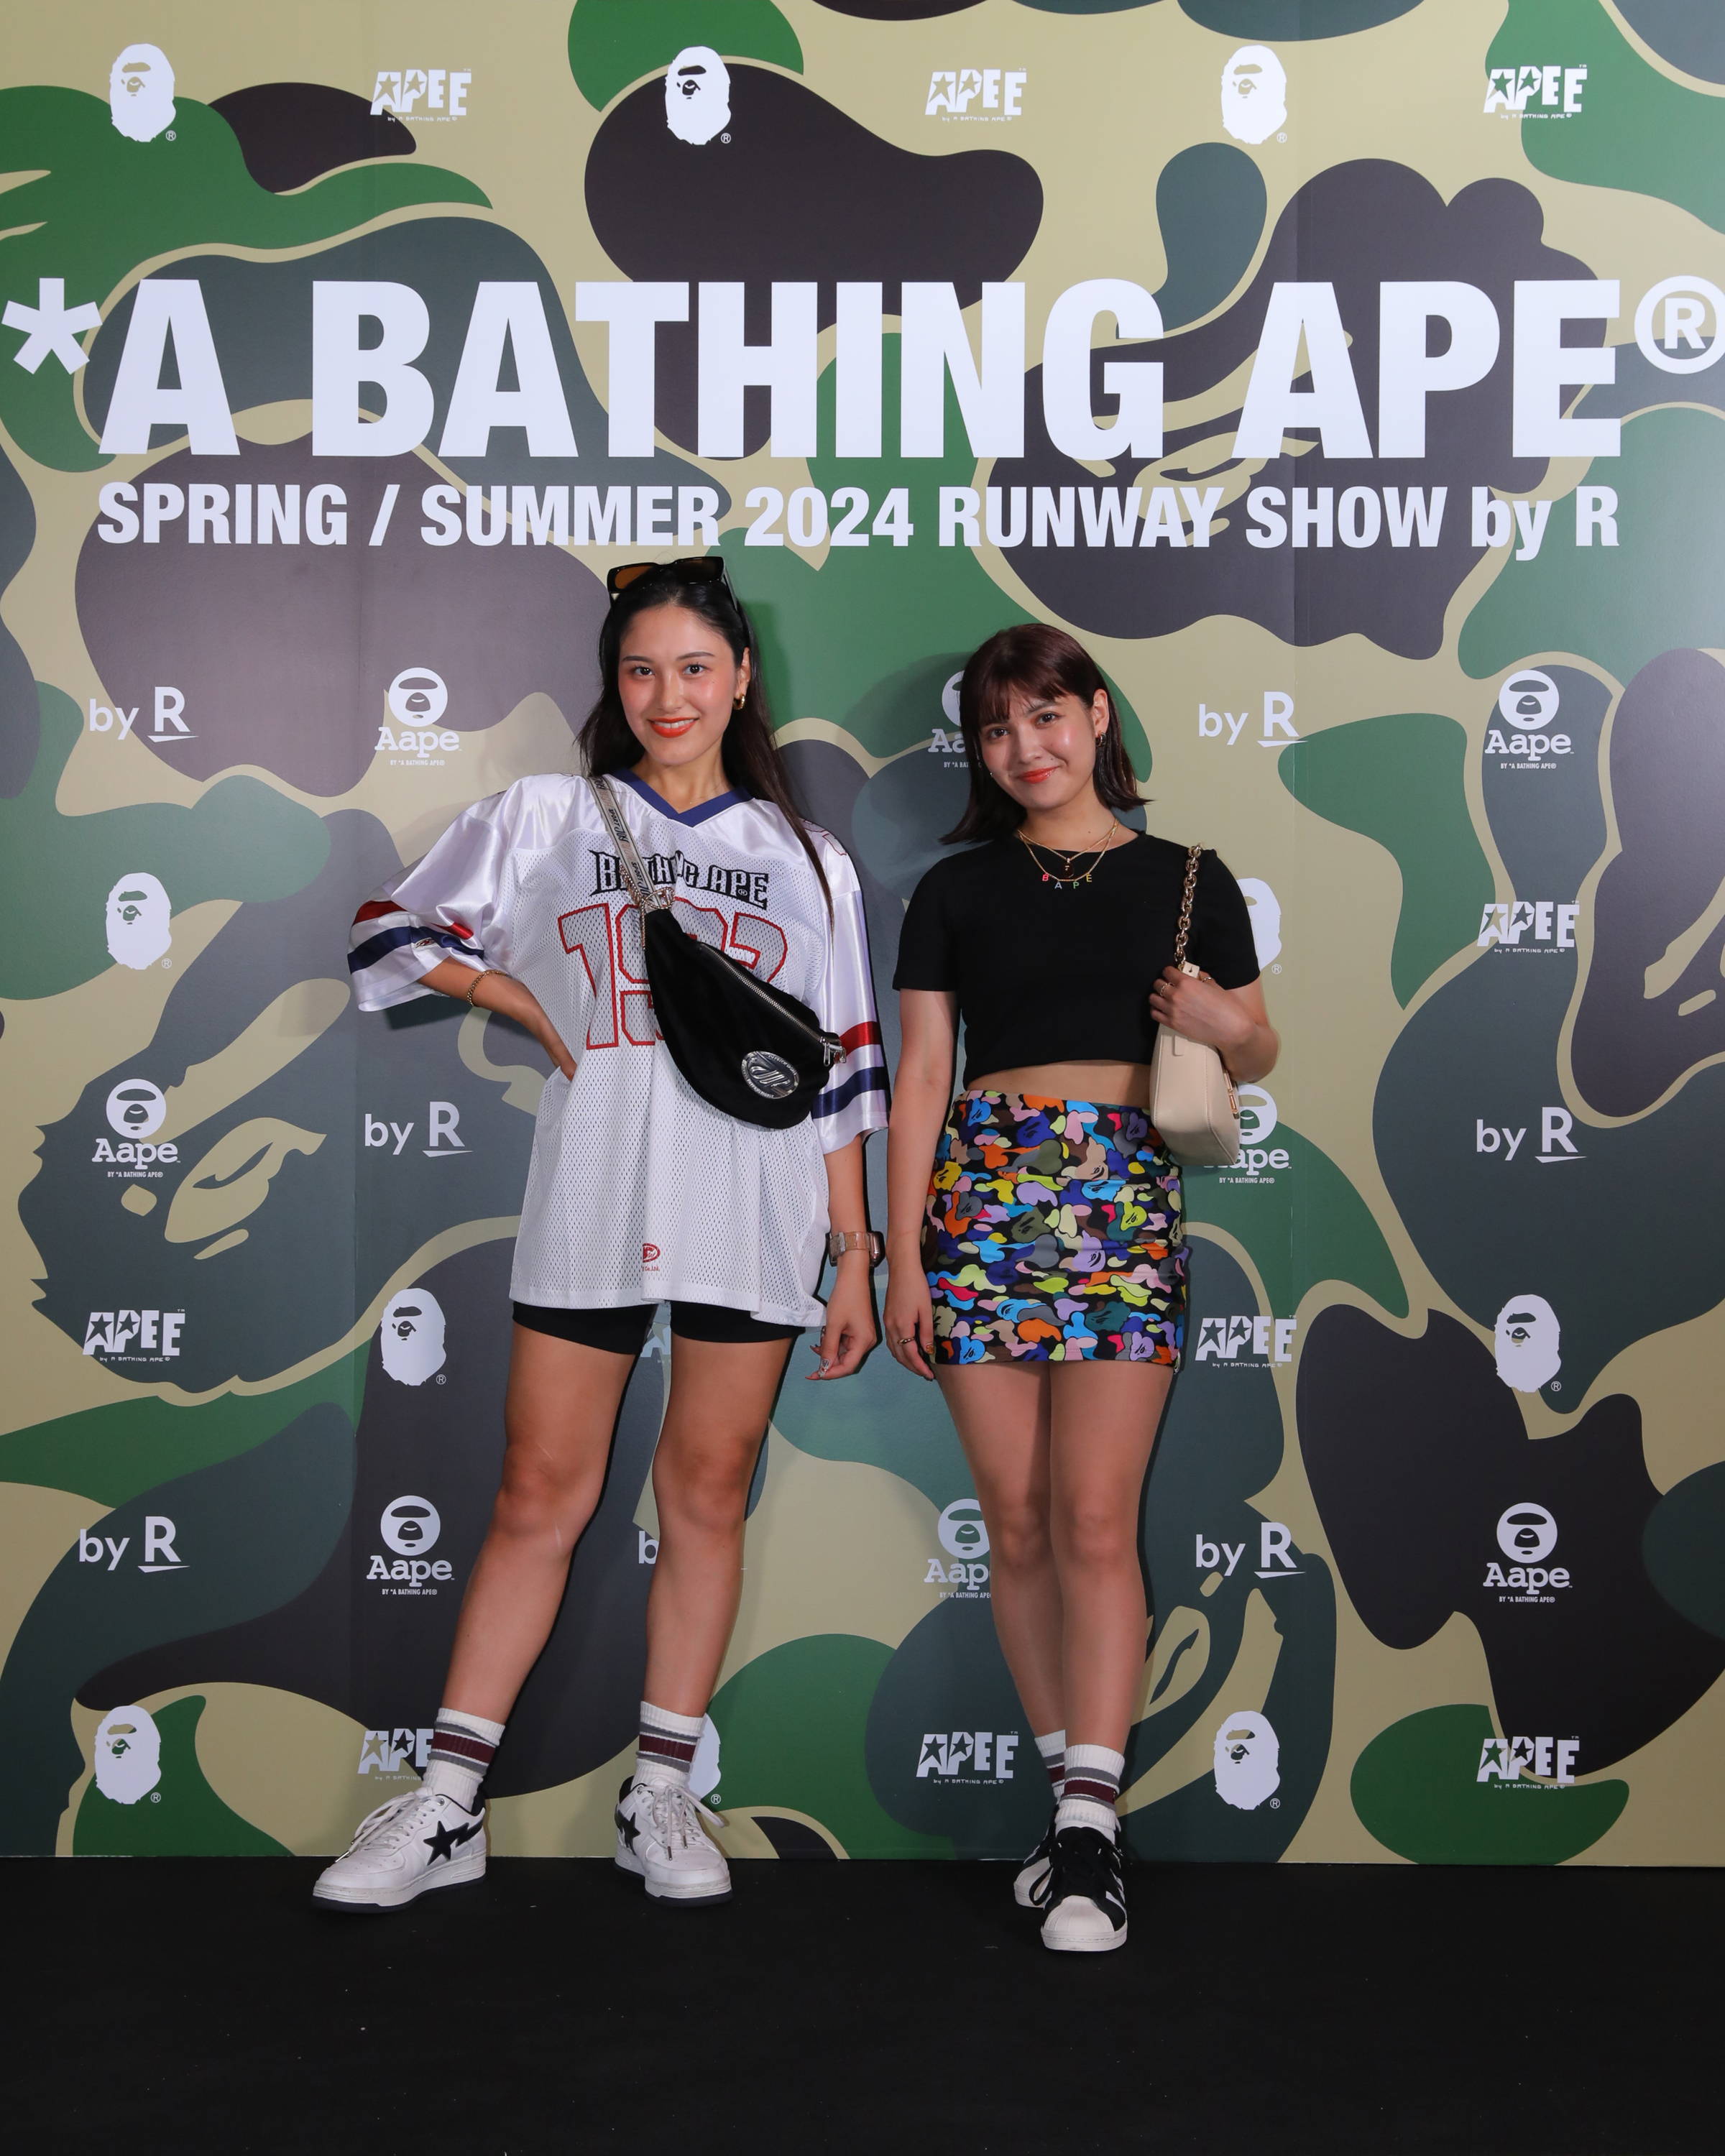 A BATHING APE® 2024 S/S Fashion Show by R | bape.com